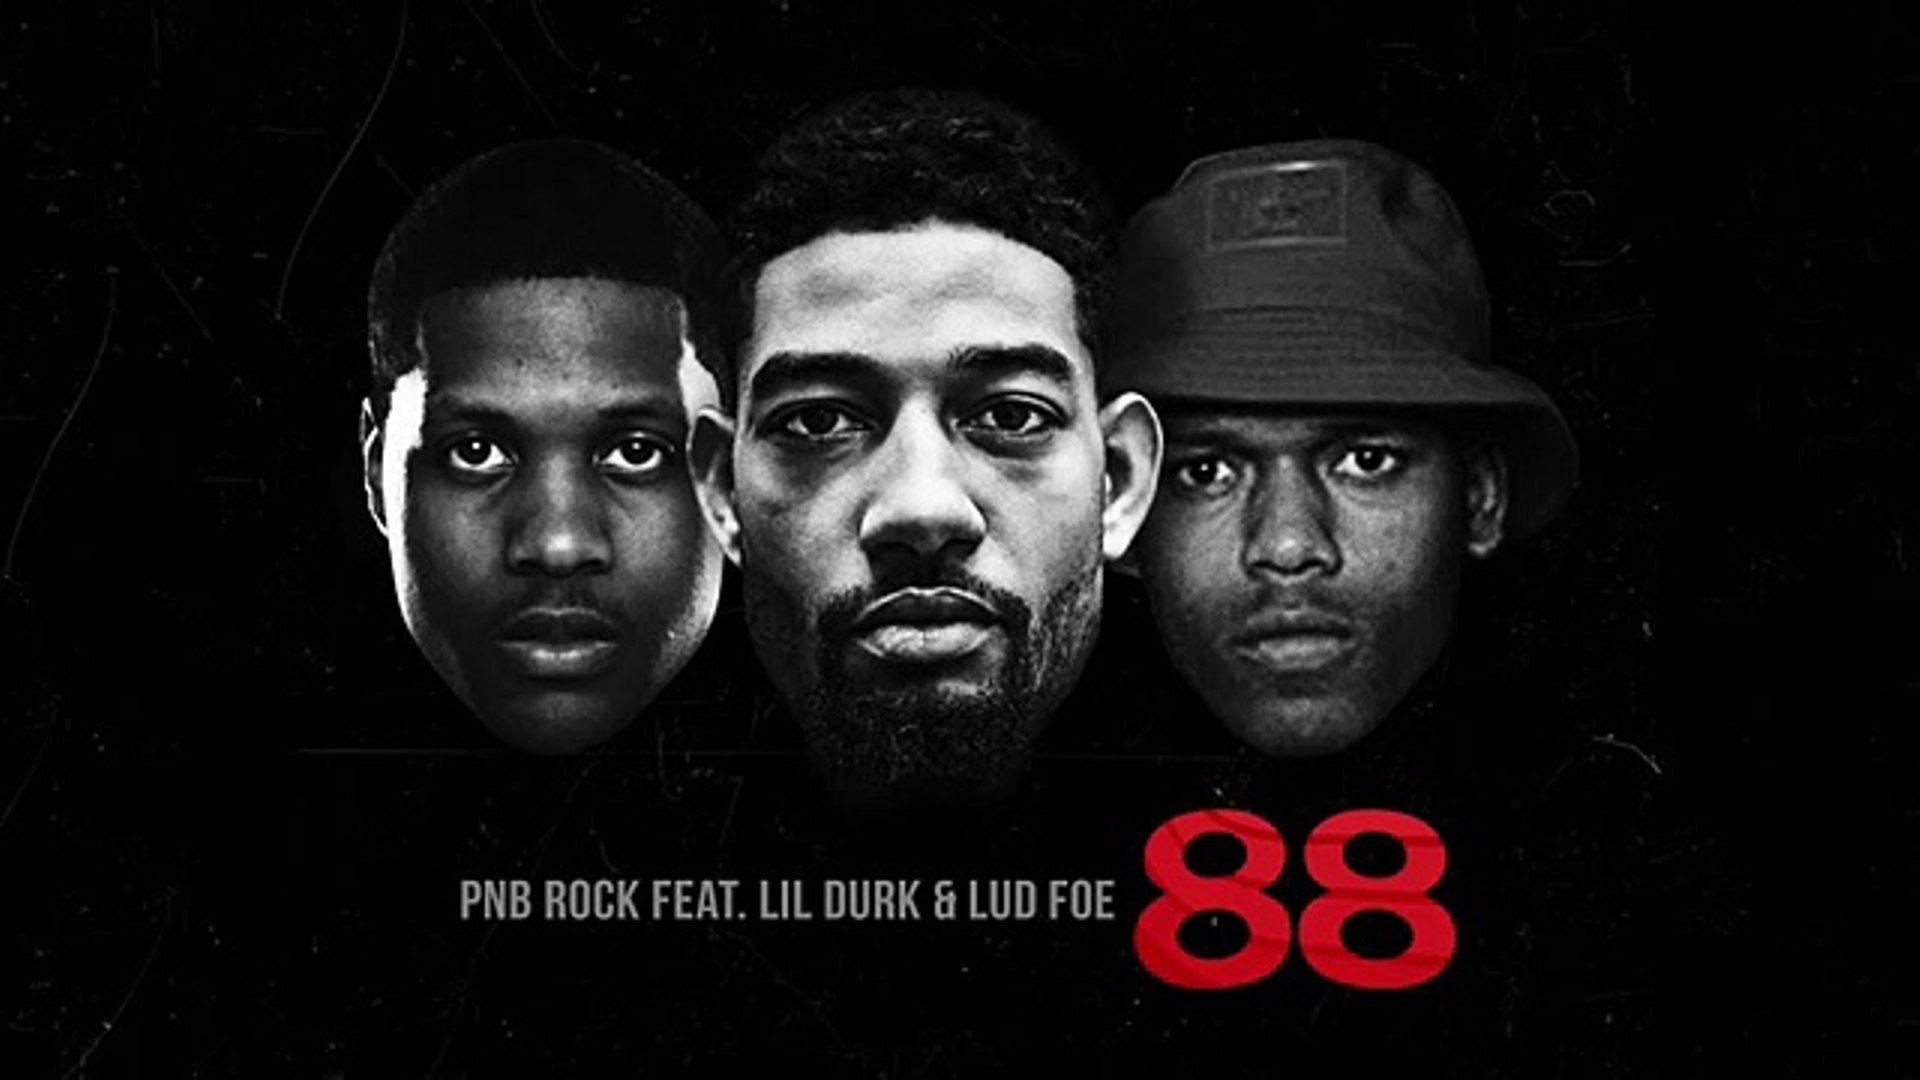 PnB Rock 88 Feat. Lil Durk & Lud Foe WSHH Exclusive